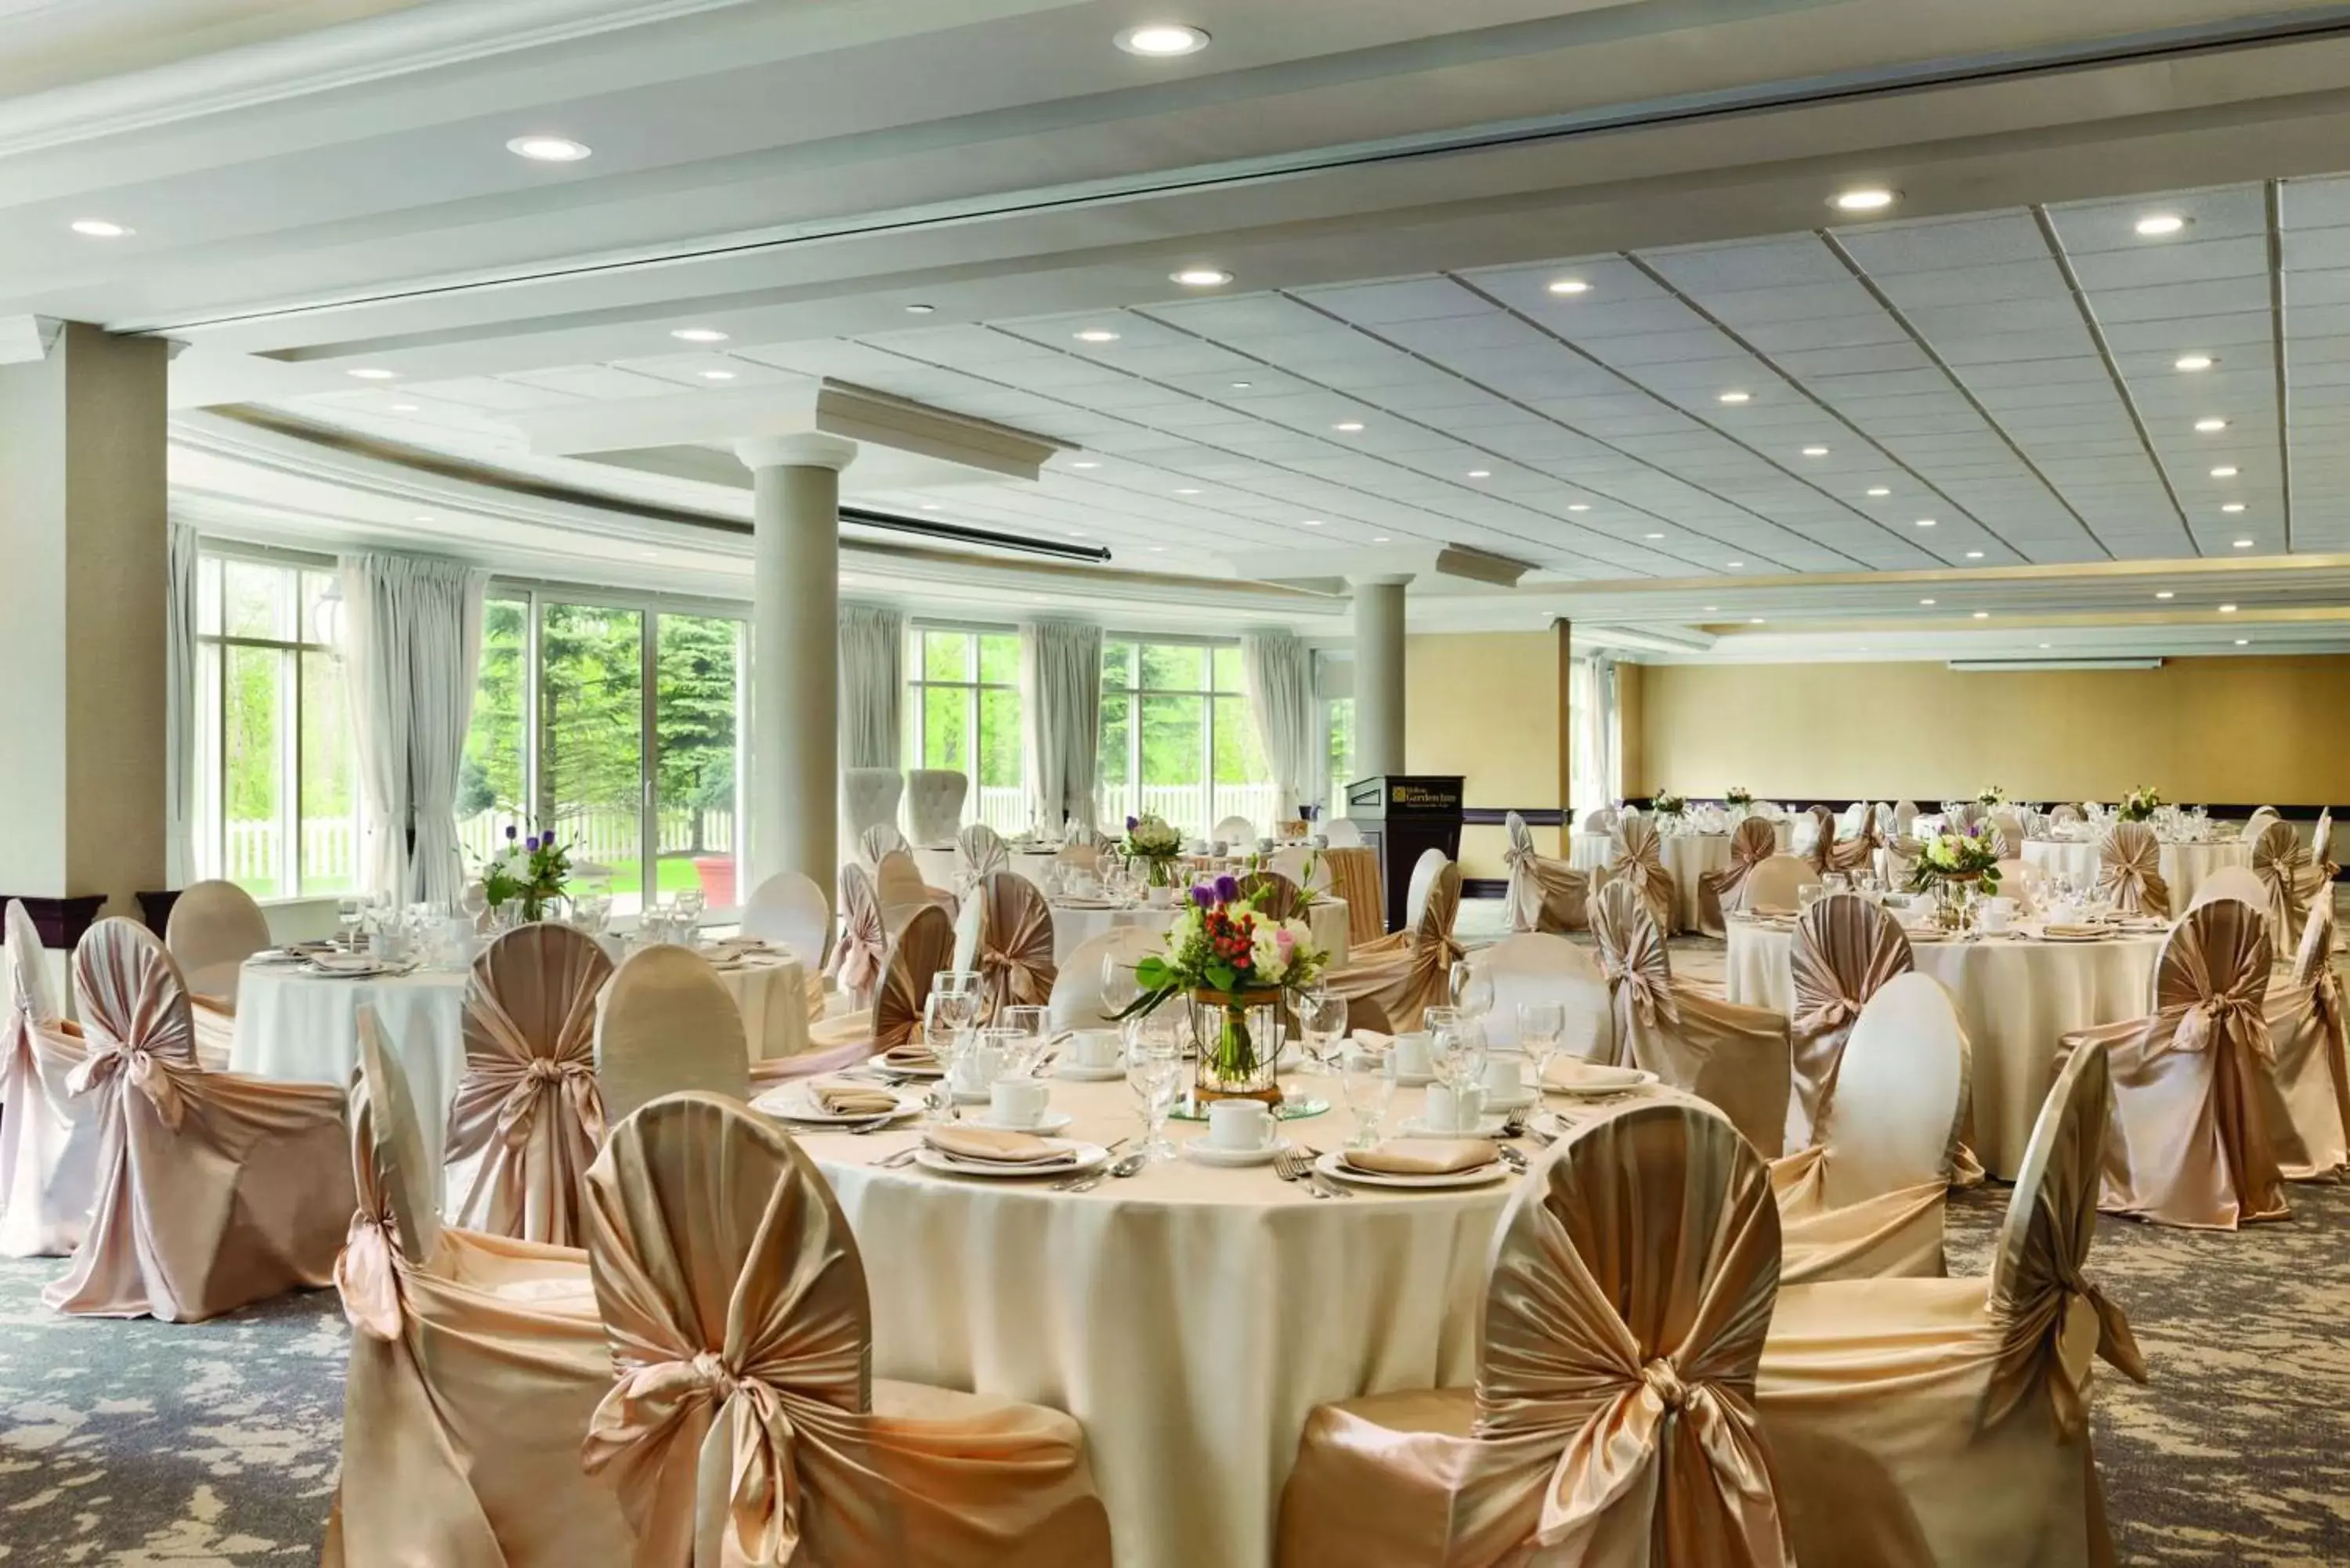 Meeting/conference room, Banquet Facilities in Hilton Garden Inn Niagara-on-the-Lake